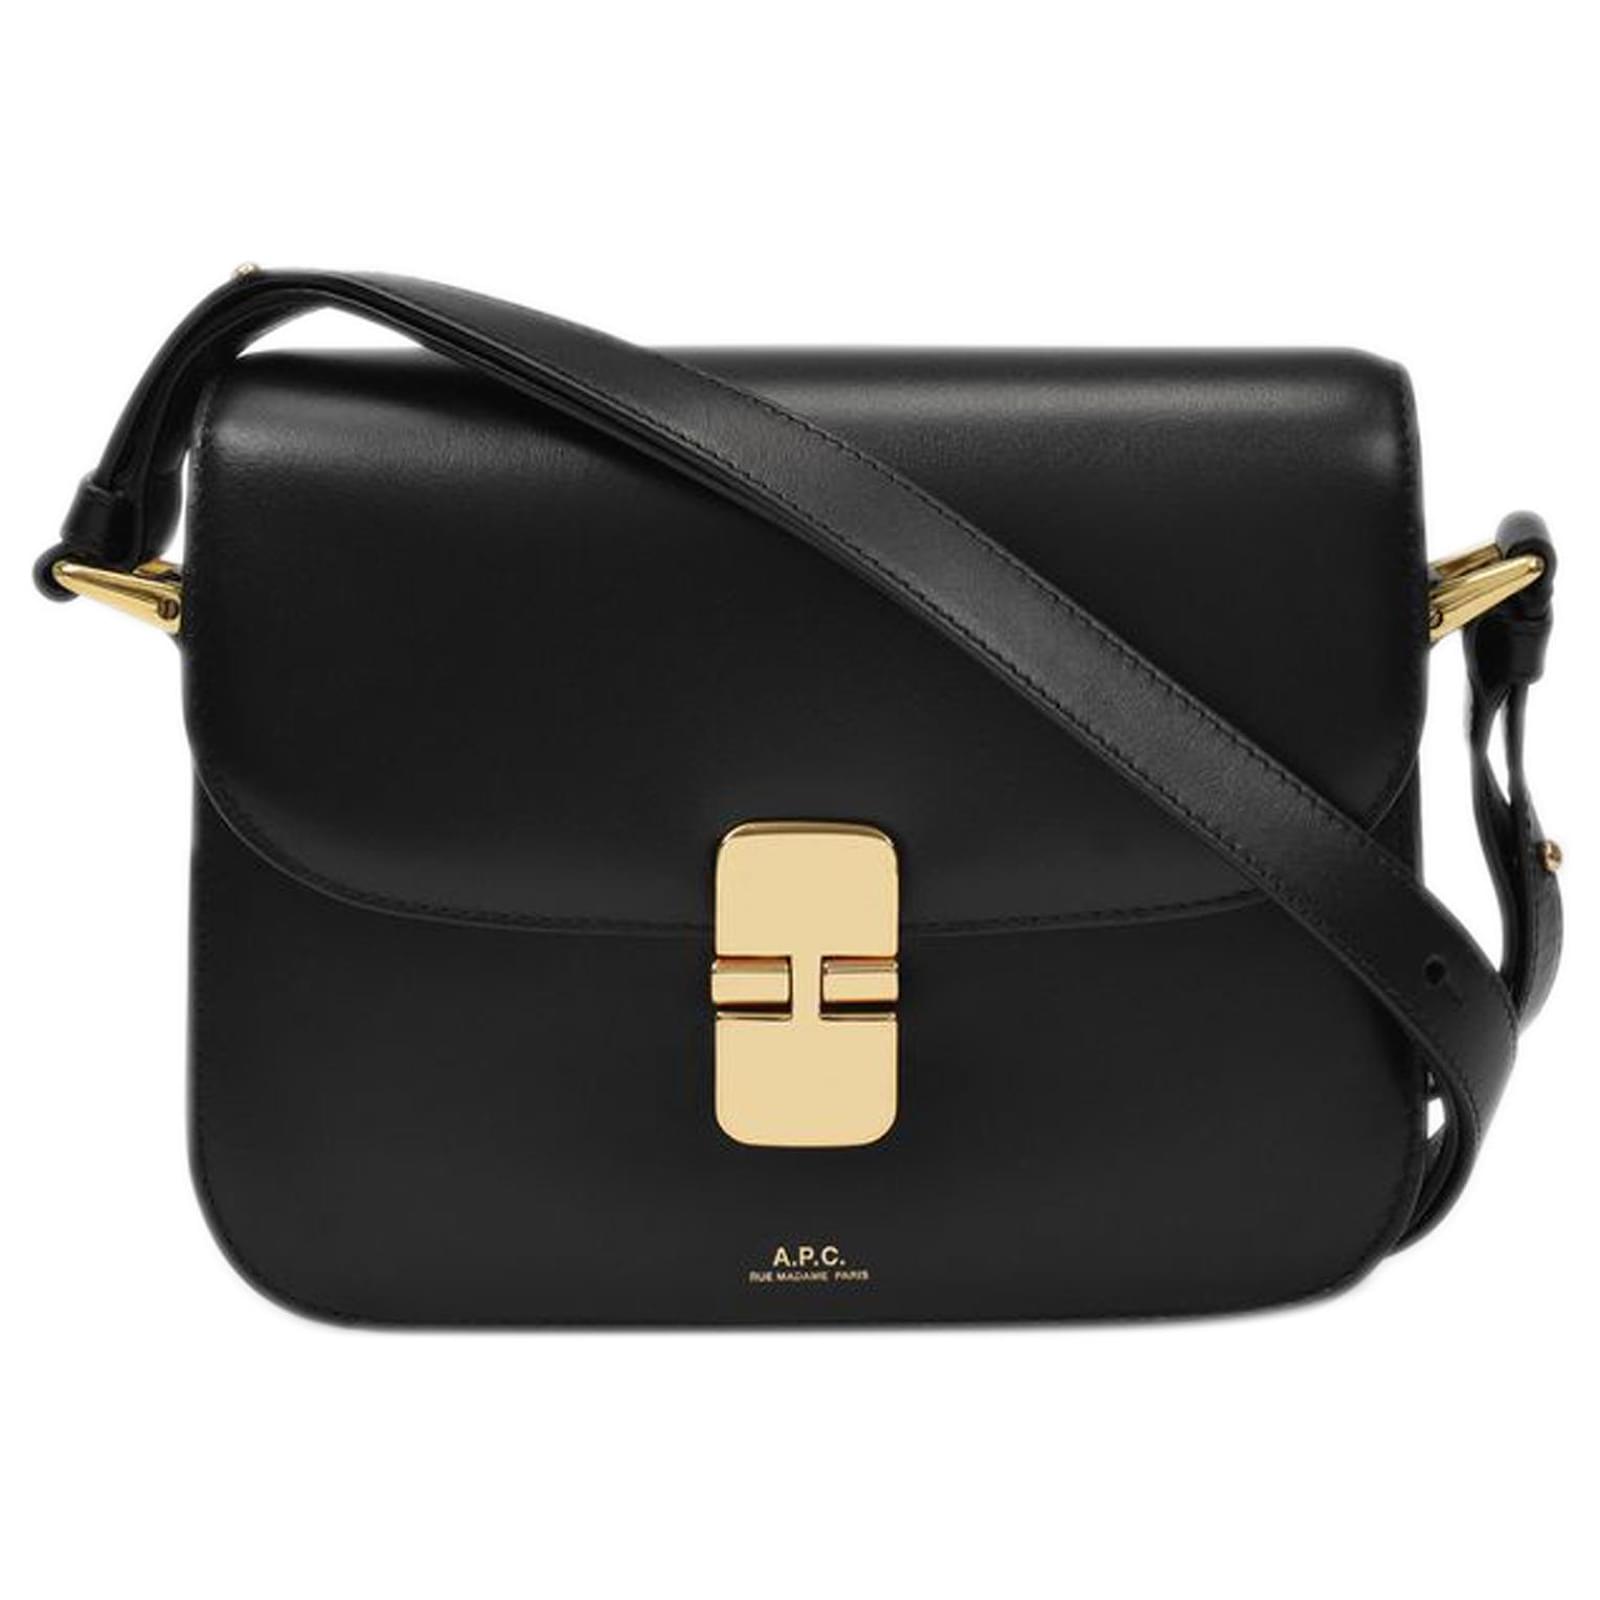 A.P.C. Grace Small Bag Black